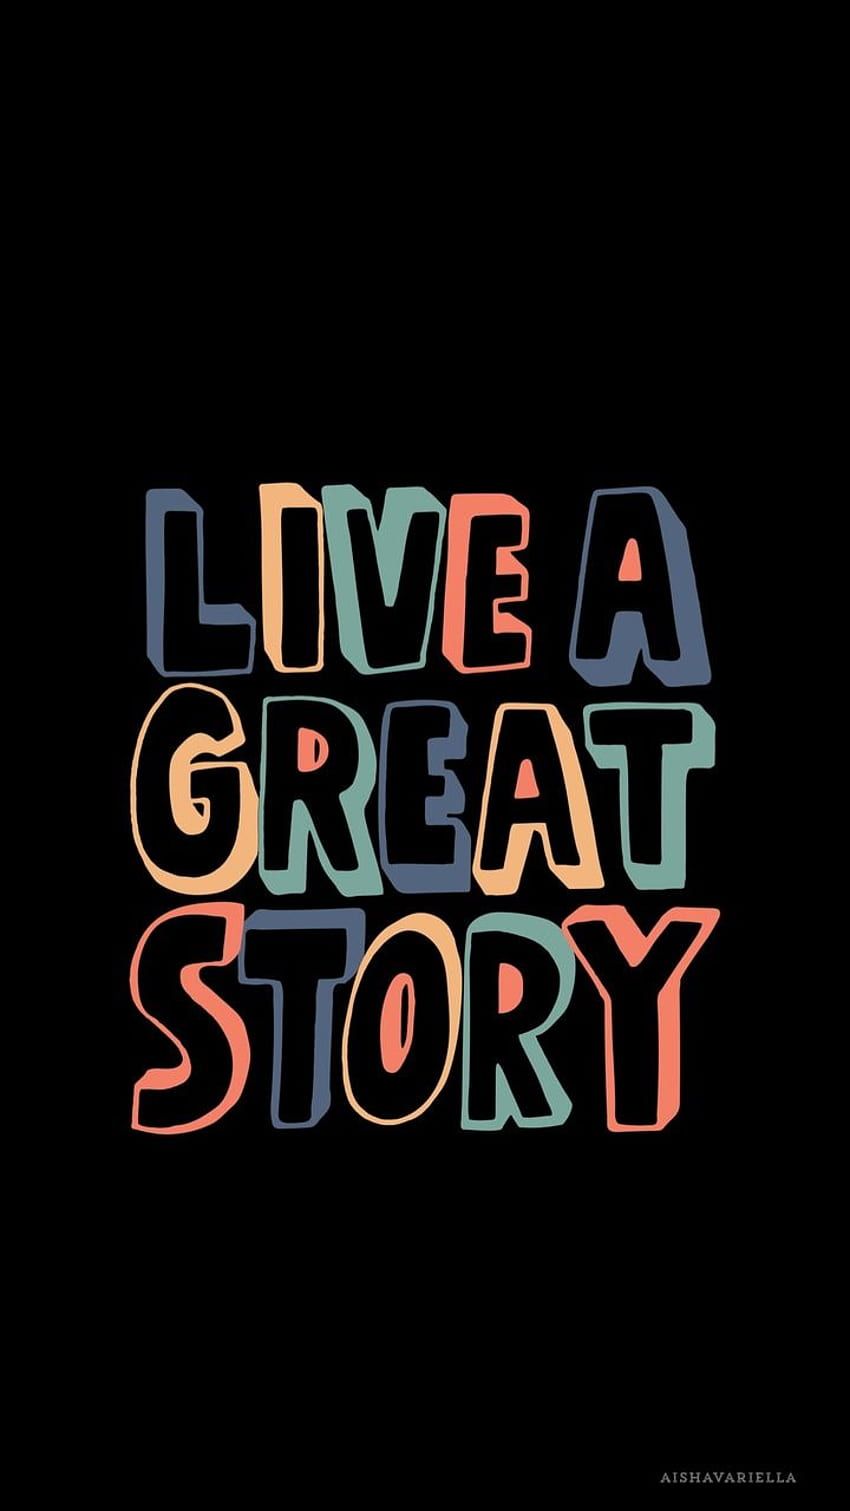 Live a great story - Motivational, inspirational